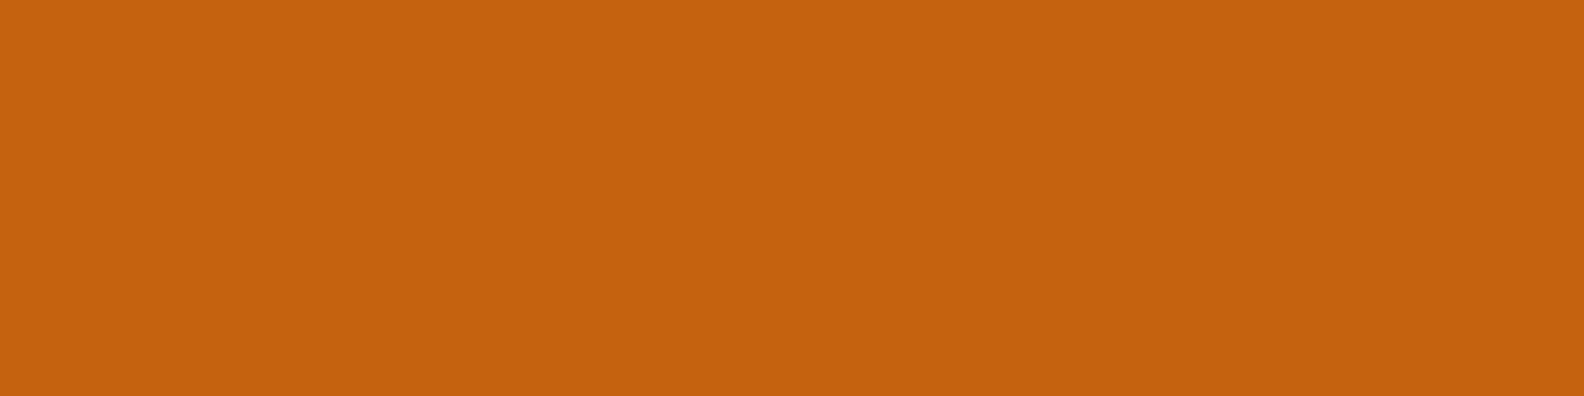 1584x396 Alloy Orange Solid Color Background